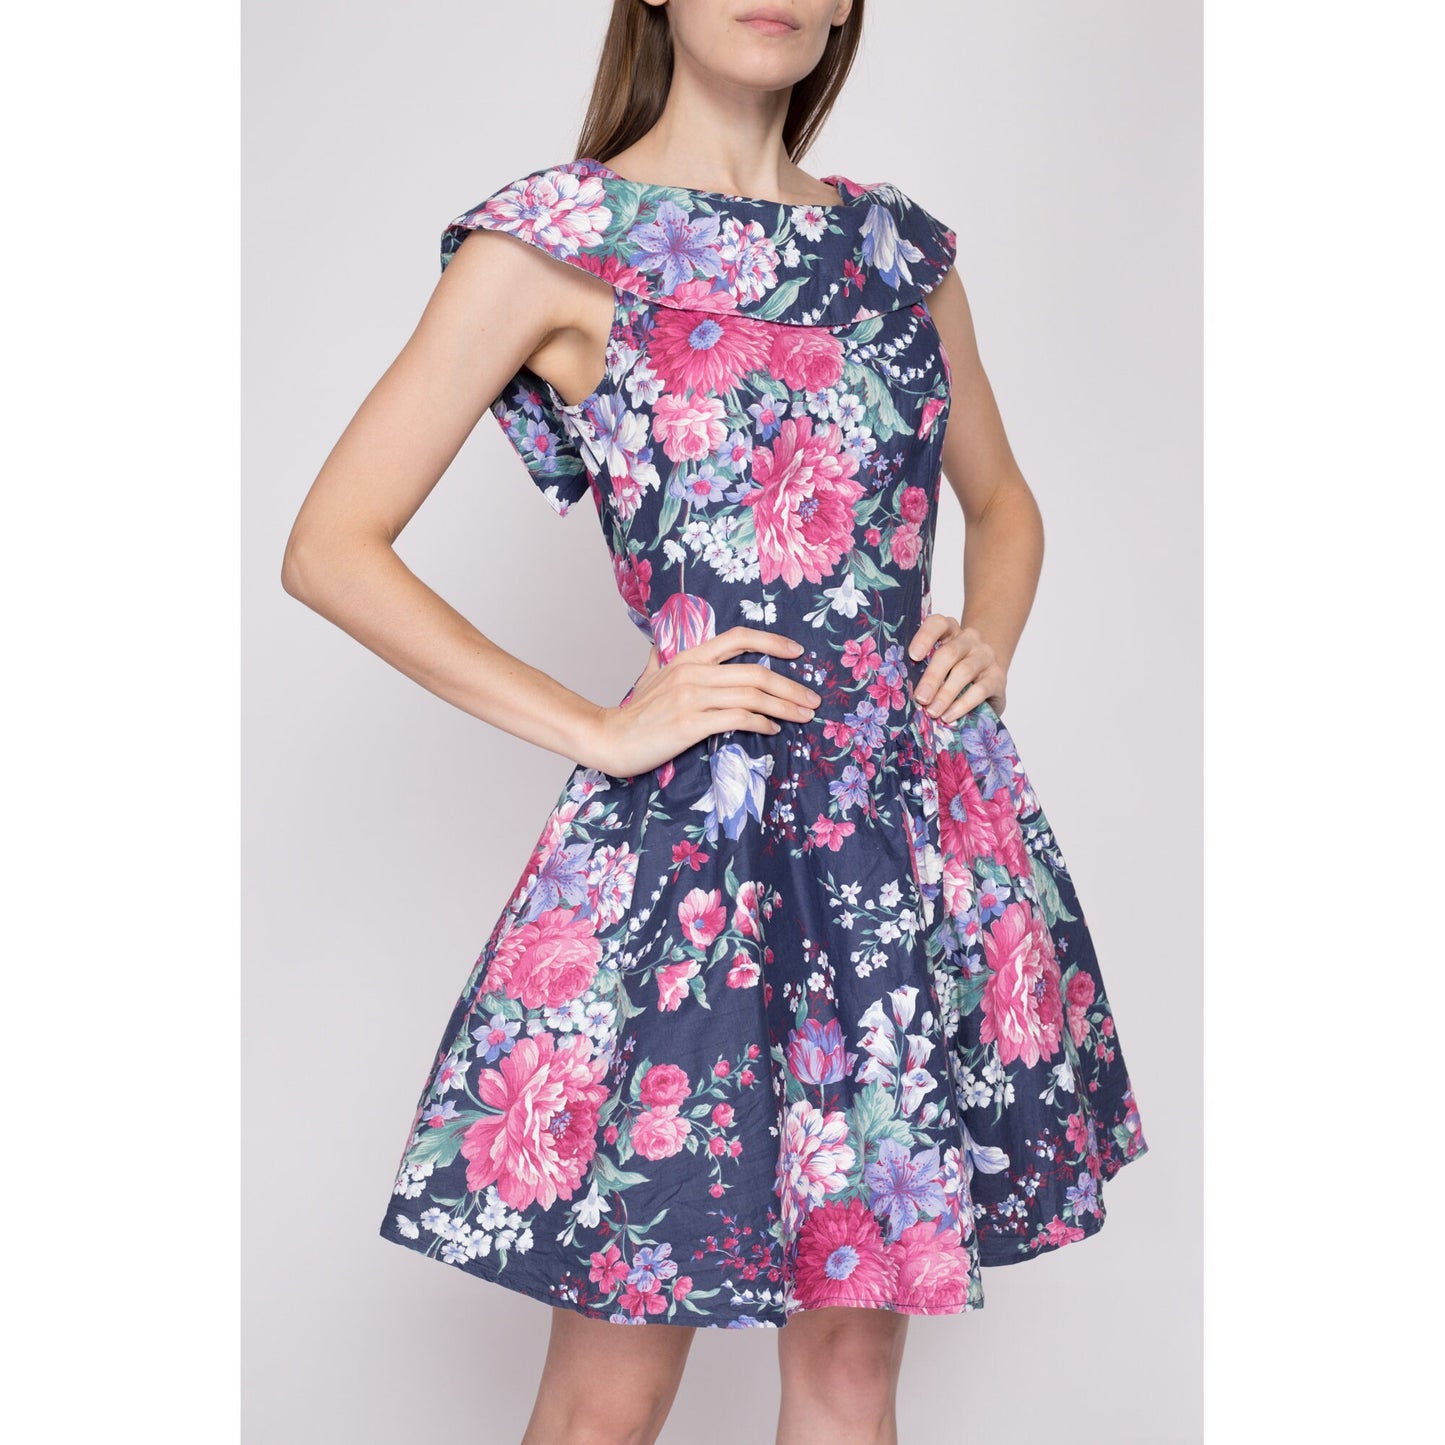 M| 80s Floral Fit & Flare Sailor Collar Party Dress - Petite Medium | Vintage Joni Blair Retro Formal Girly Mini Dress